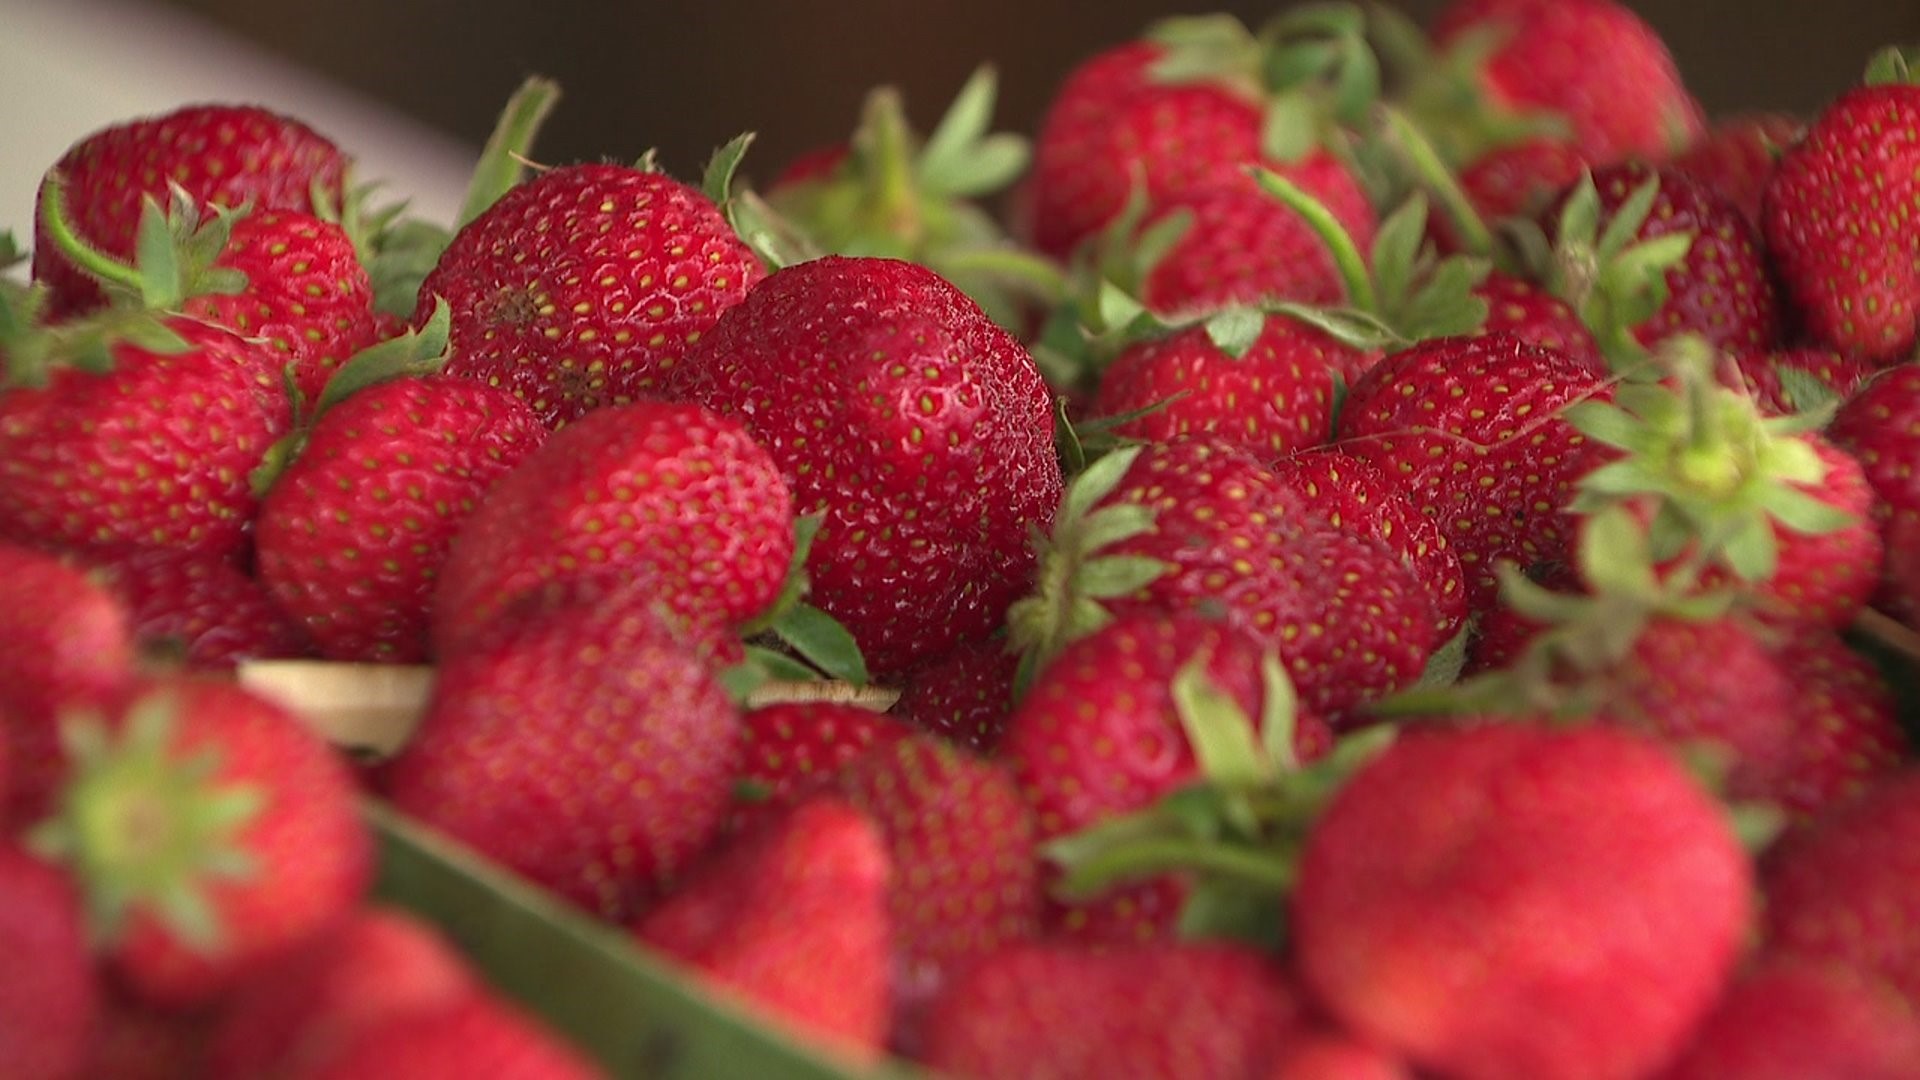 Pride of the Wapsi debuts 2018 strawberry crop in Long Grove, Iowa